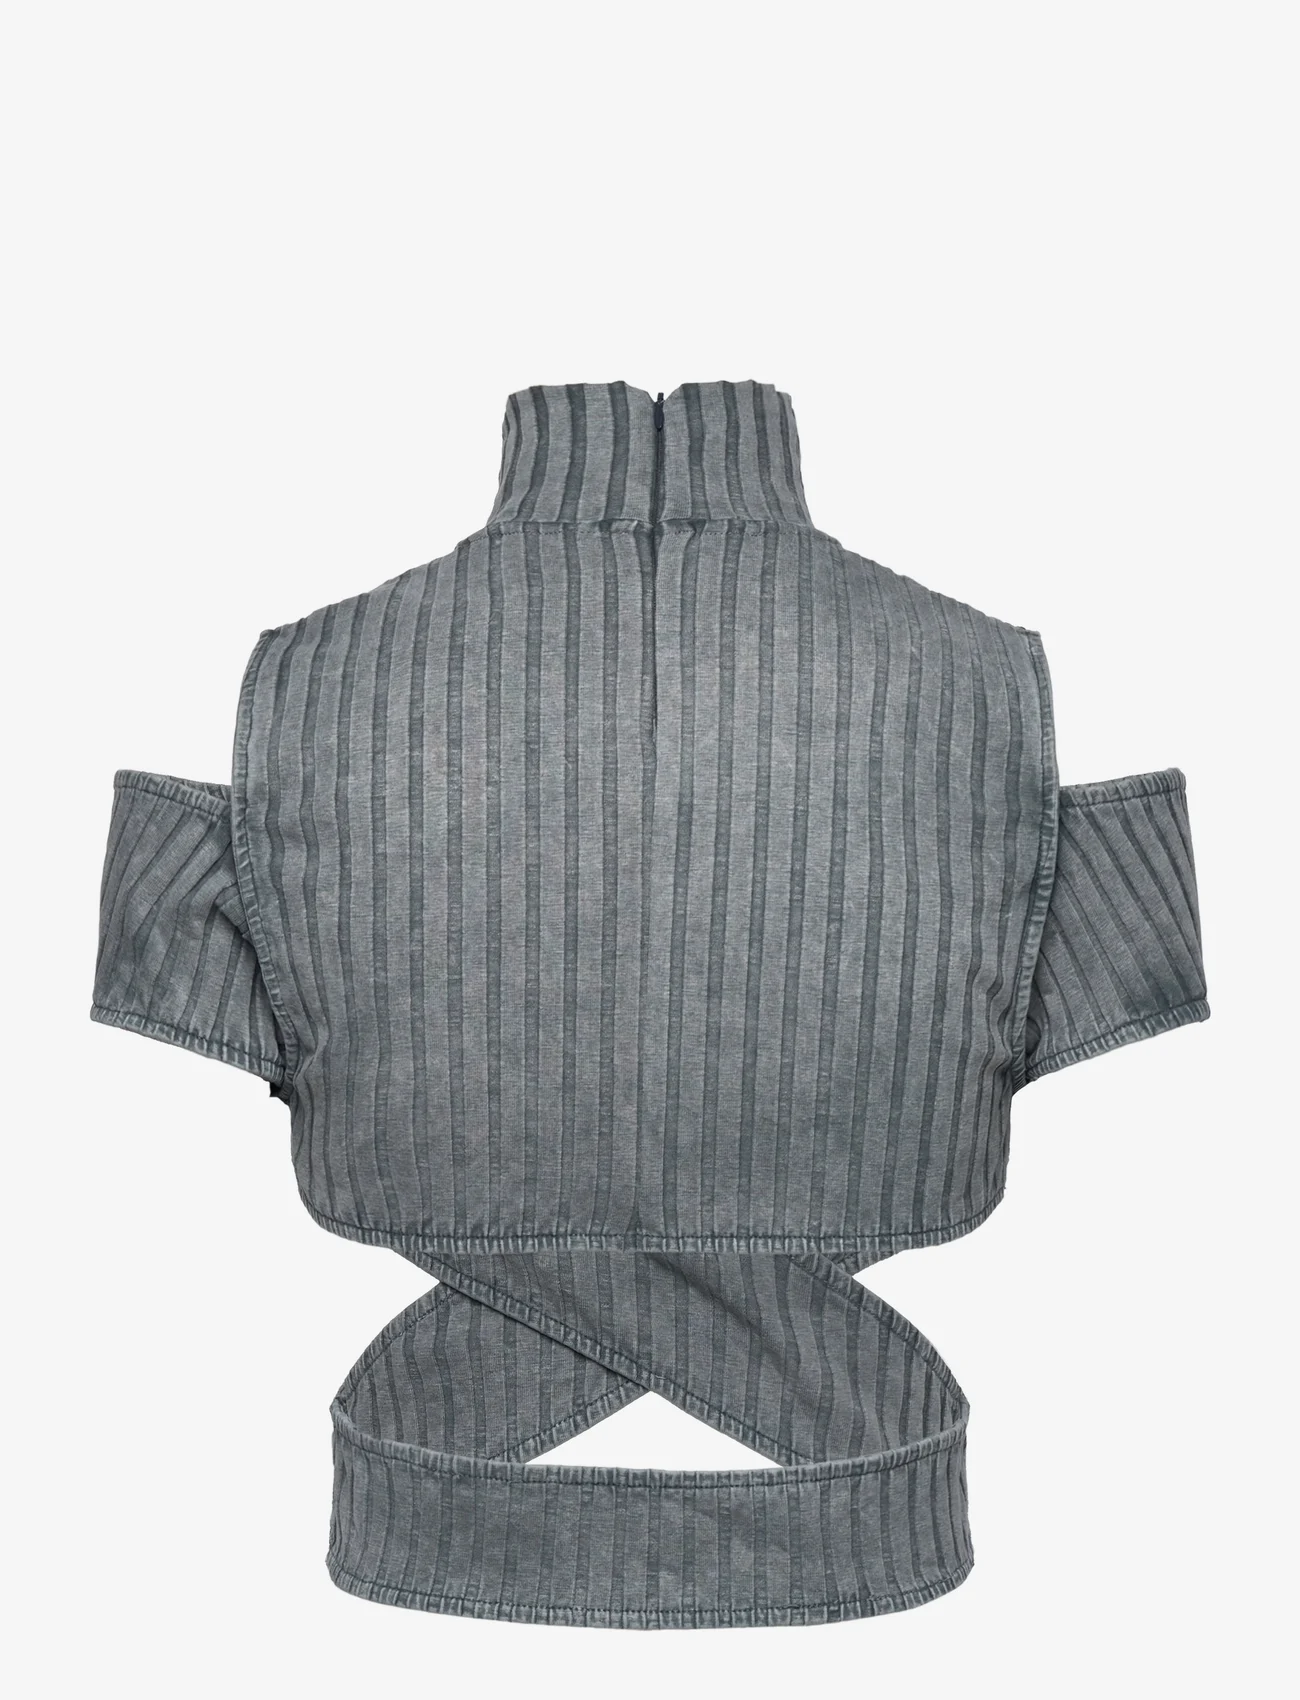 HAN Kjøbenhavn - Jersey Rib Off-Shoulder Top - t-paidat - dark grey - 1